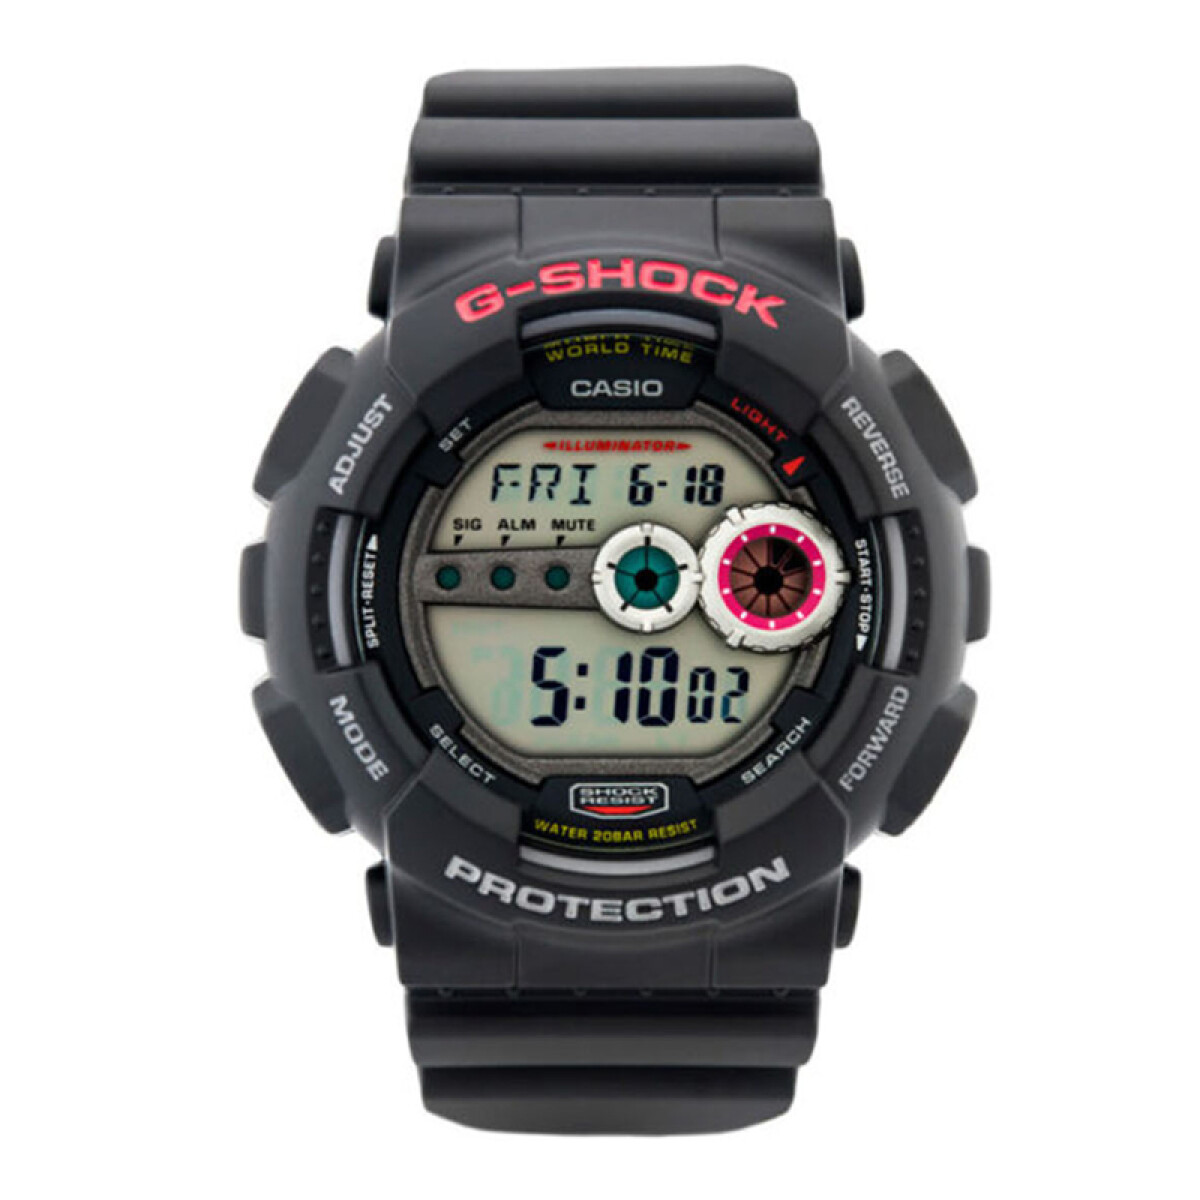 Reloj G-Shock con luz led en negro GD-100 